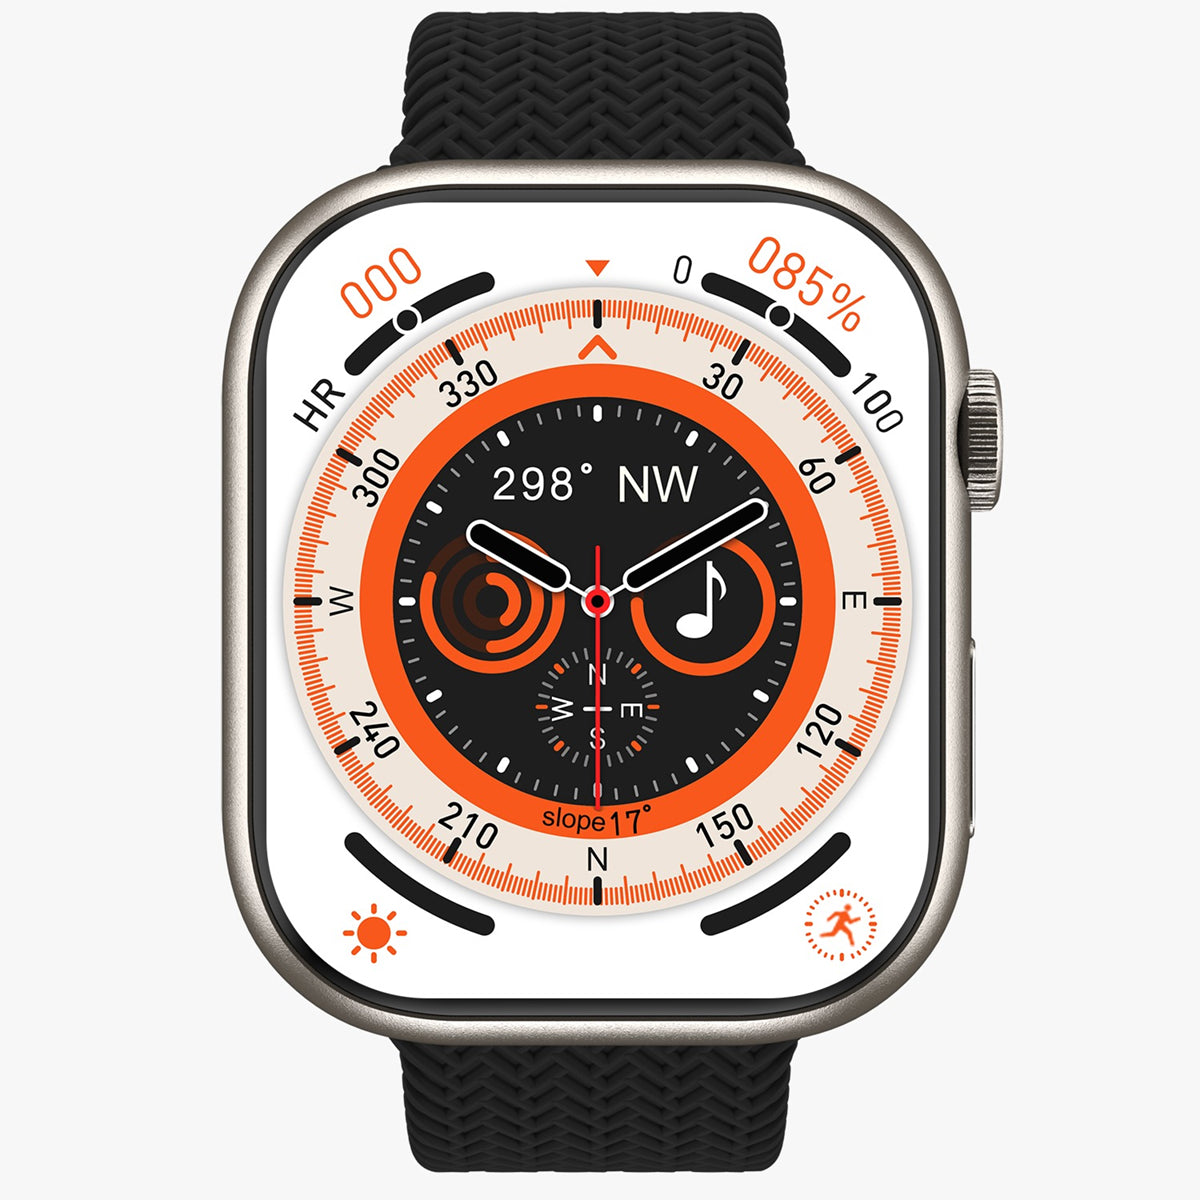 Reloj Inteligente Smartwatch Hk9 Pro Fralugio Mide Glucosa